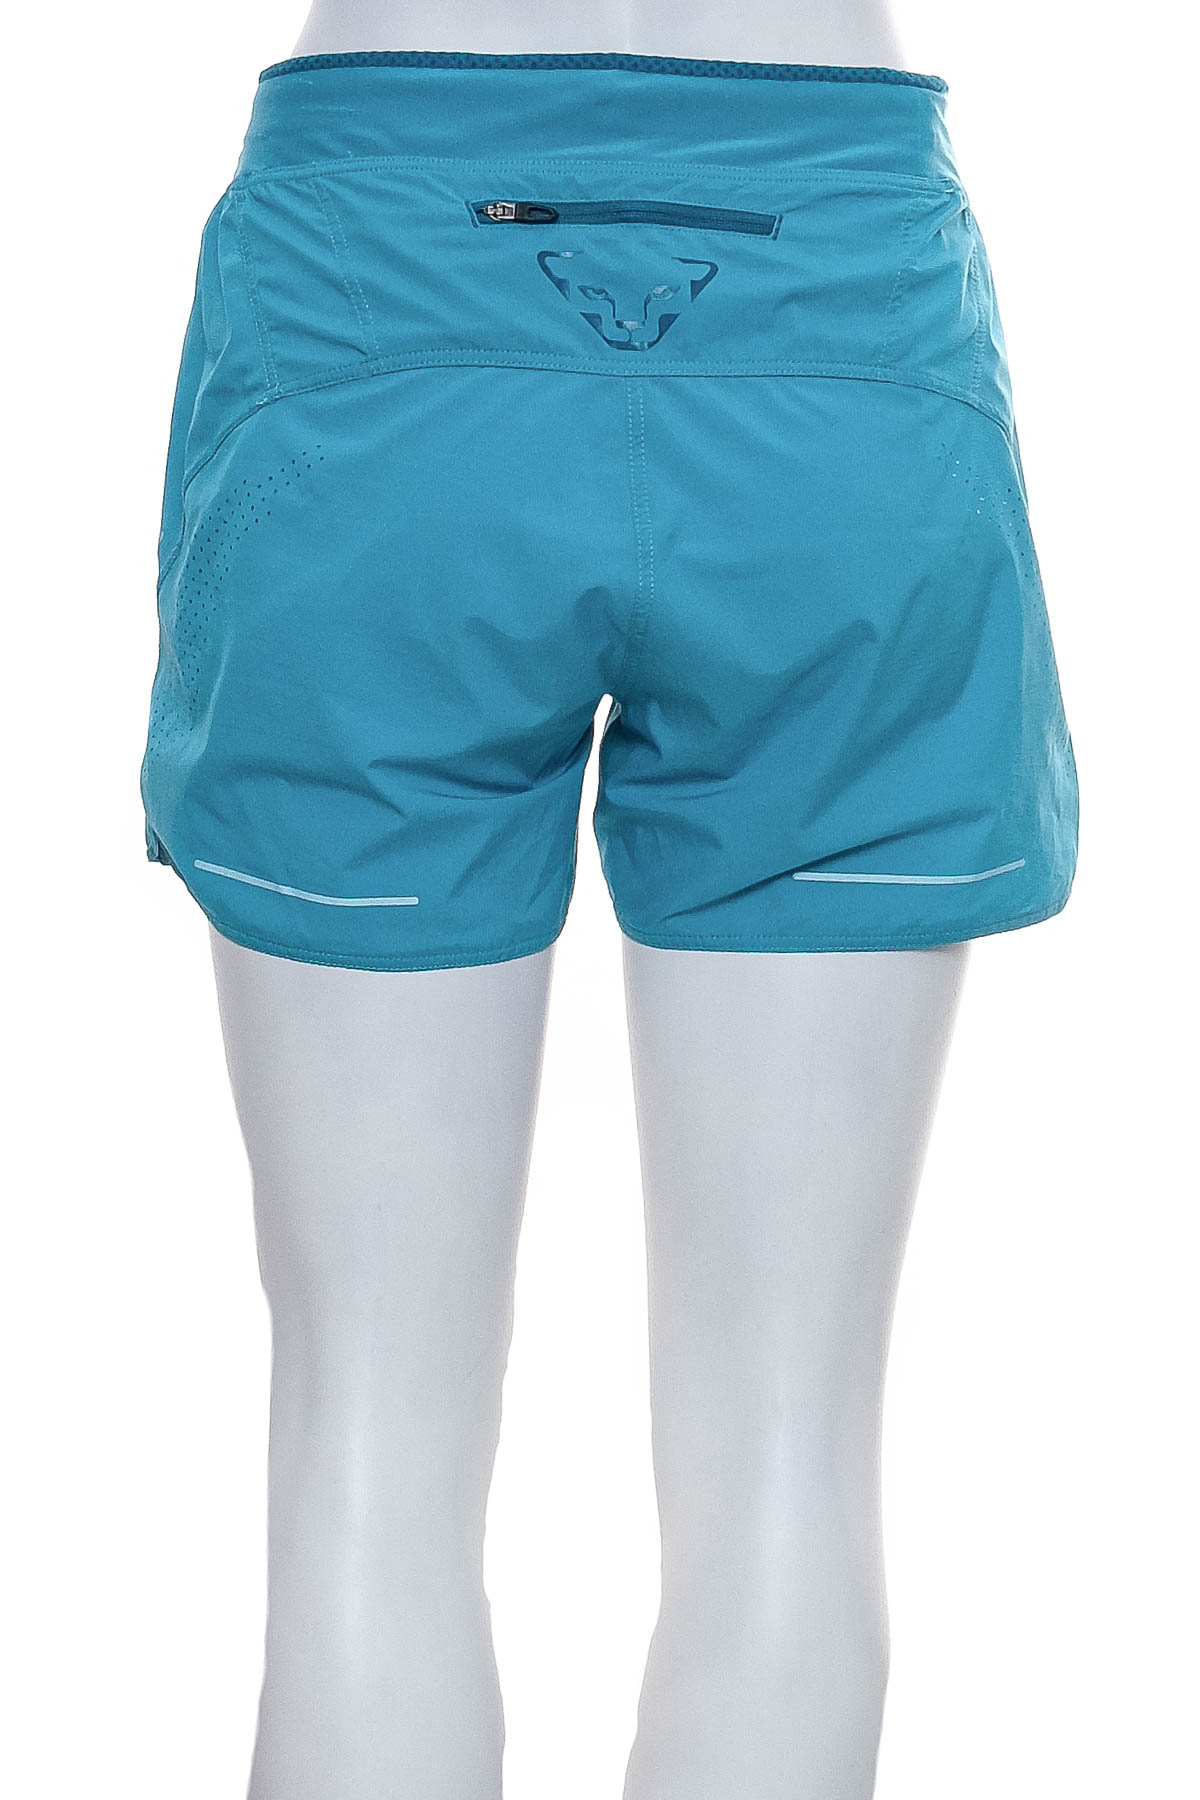 Women's shorts - DYNAFIT - 1